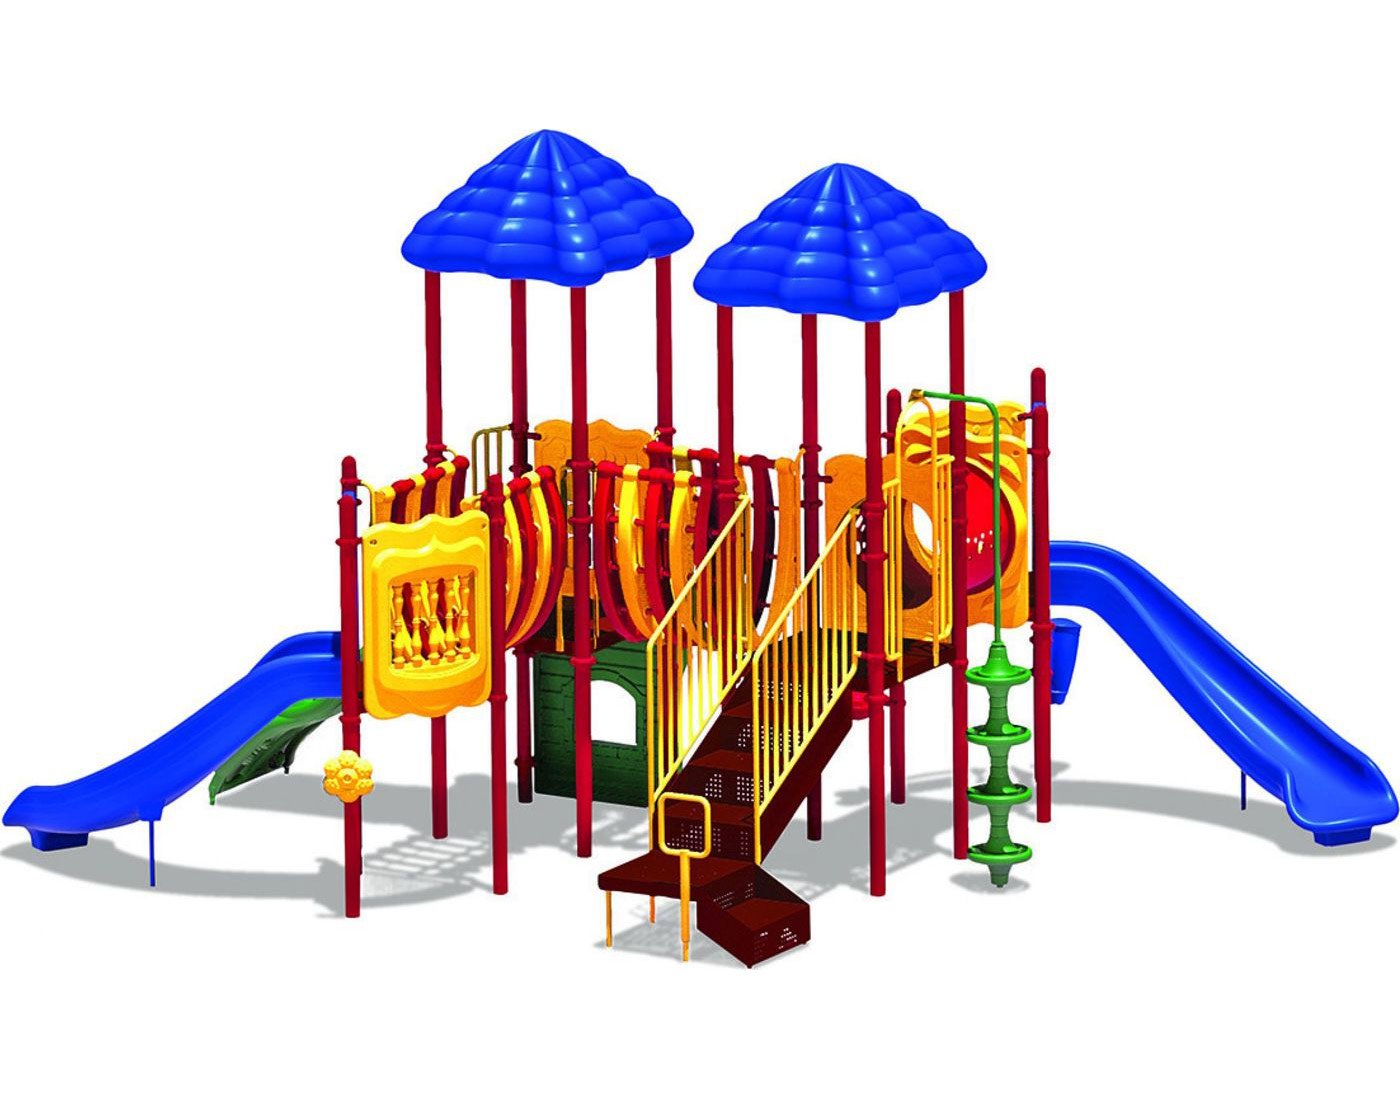 Pike's Peak Playground Play System - Playful